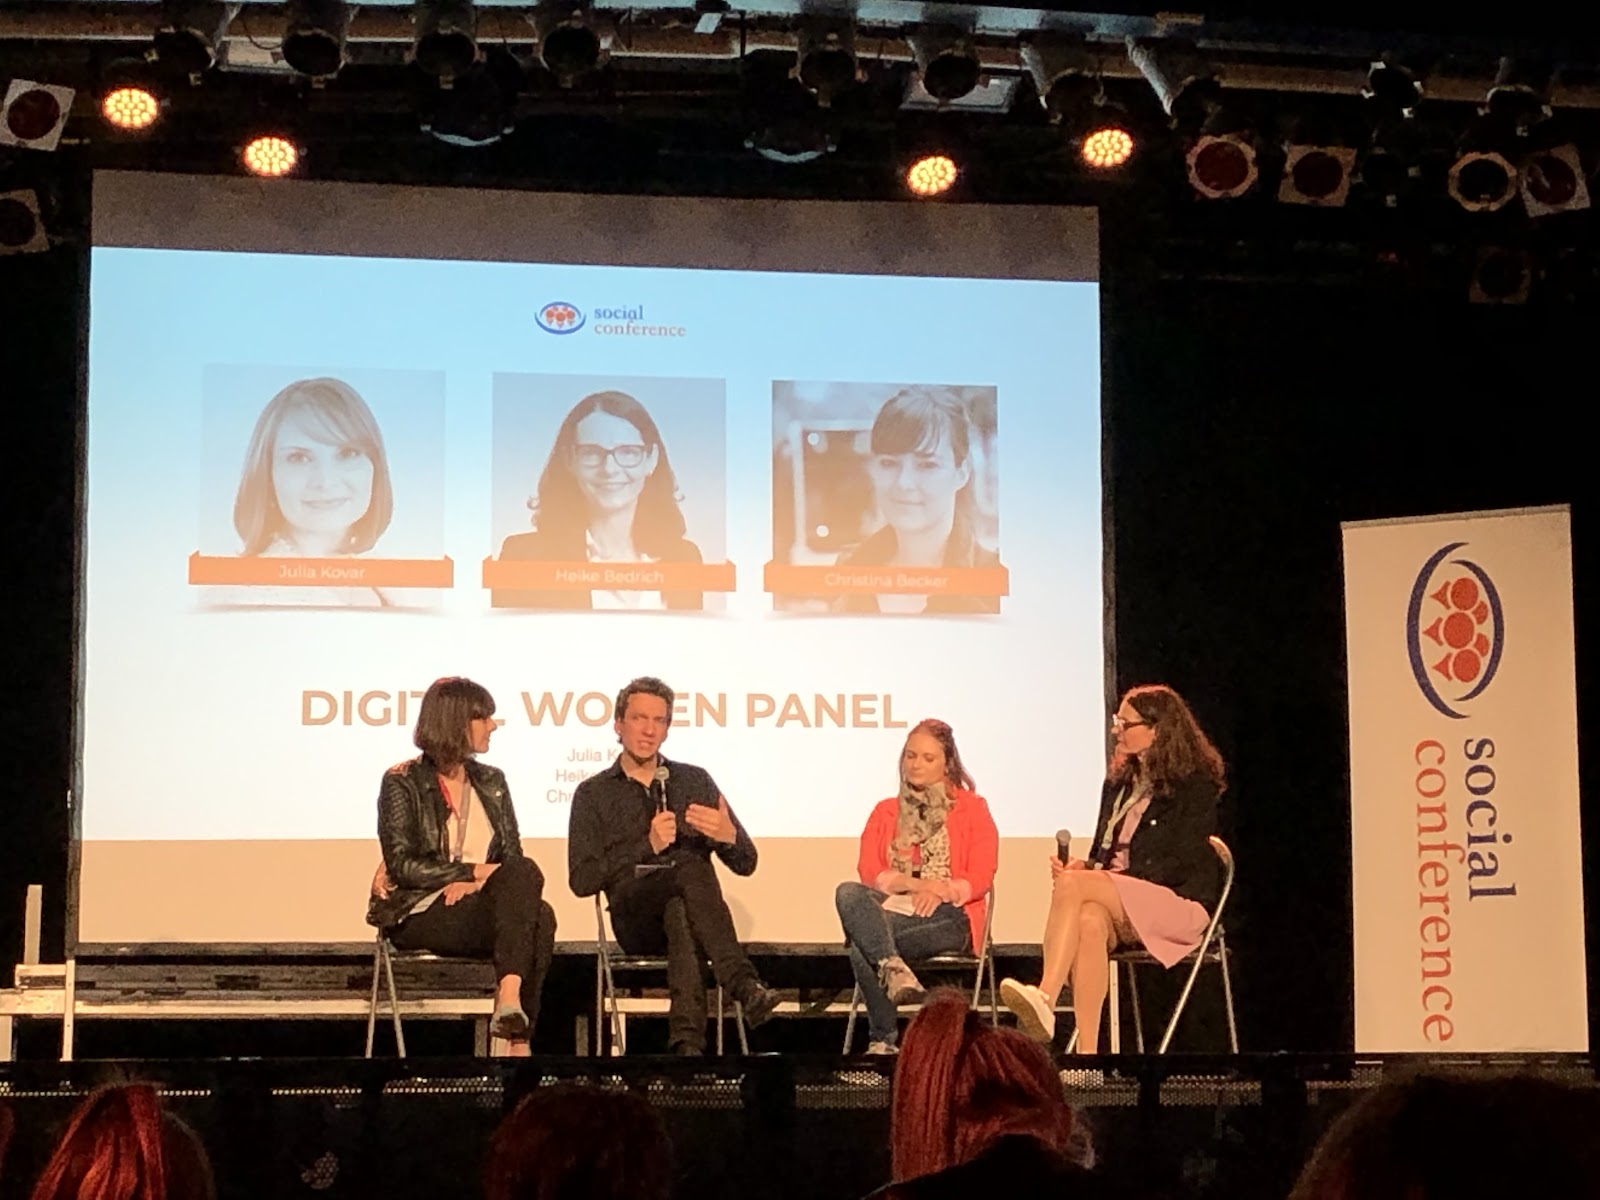 Digital Women Panel